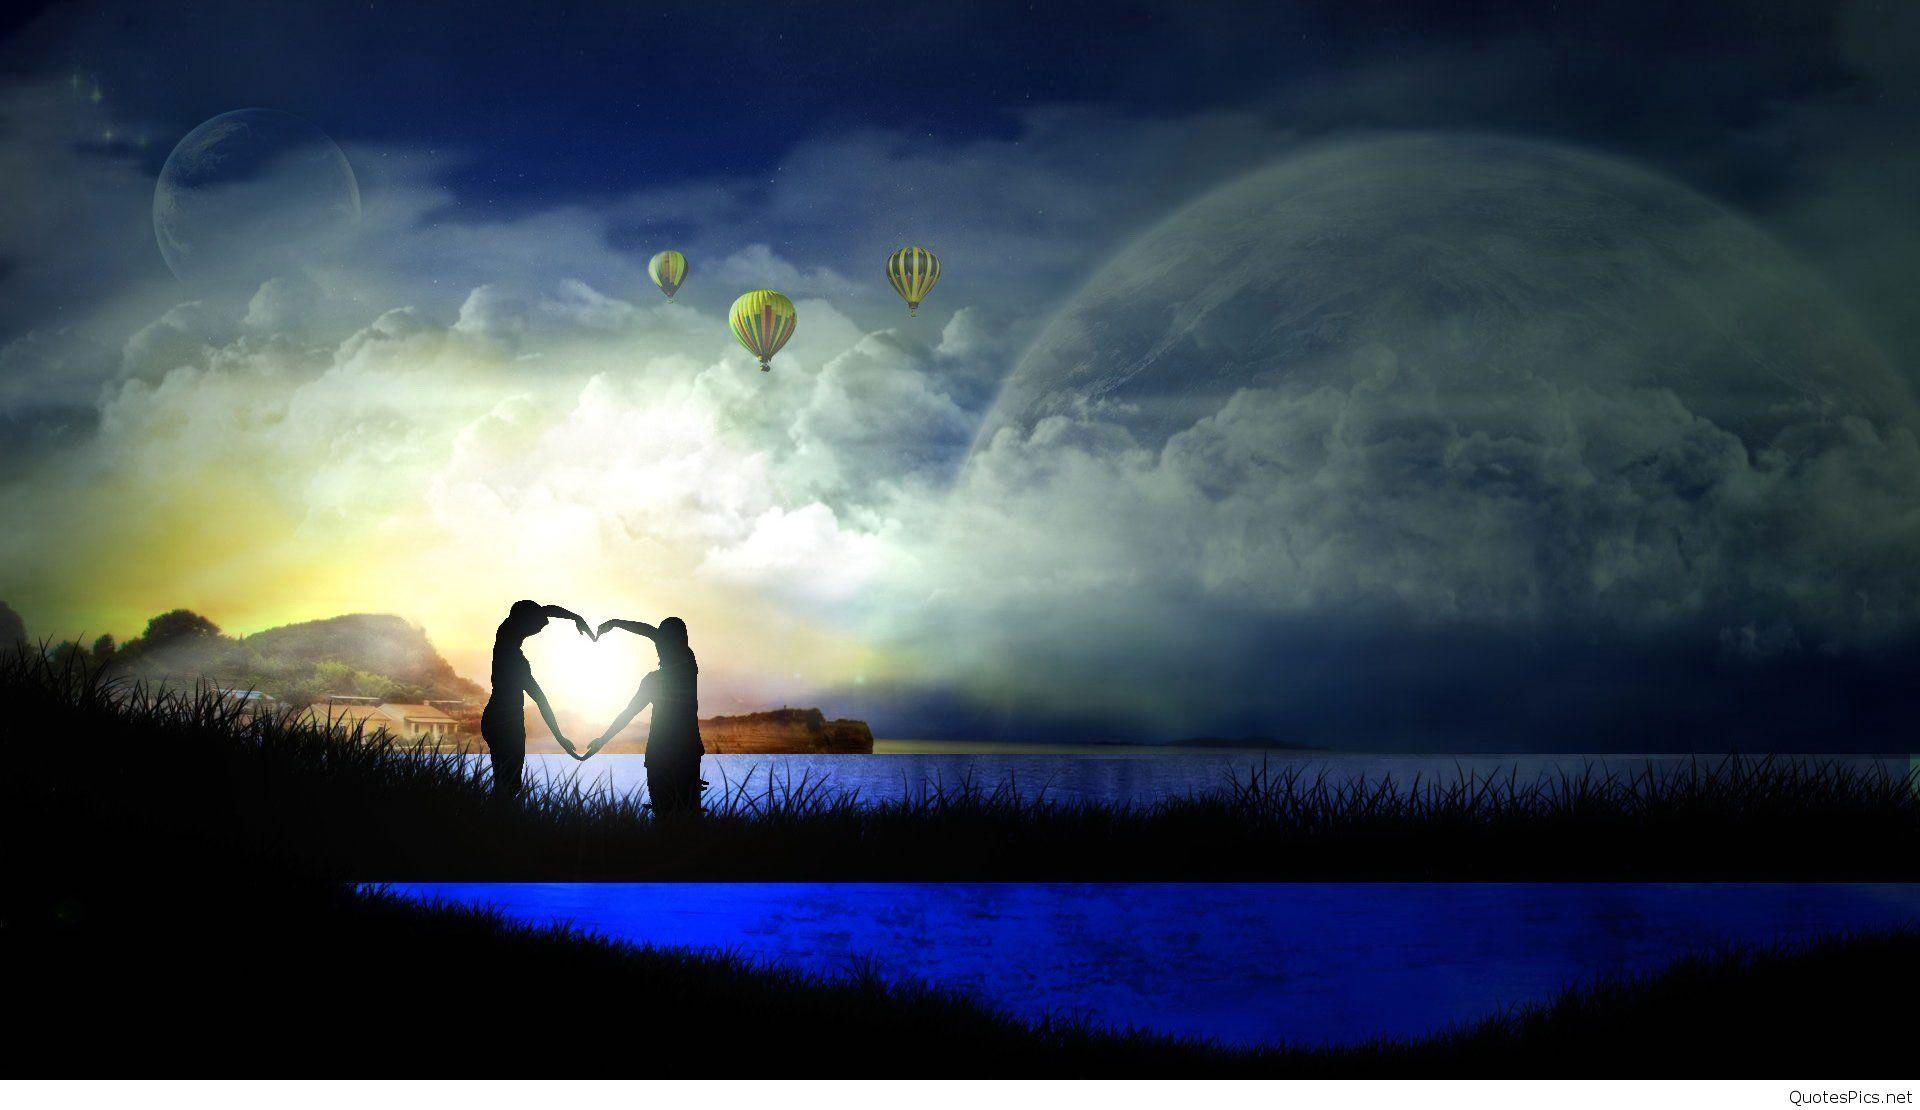 Fantasy Couple Love Animated Full Screen High Resolution Wallpaper Free Desktop Background Image Download. Romantic Wallpaper, Love Couple Image, Love Wallpaper